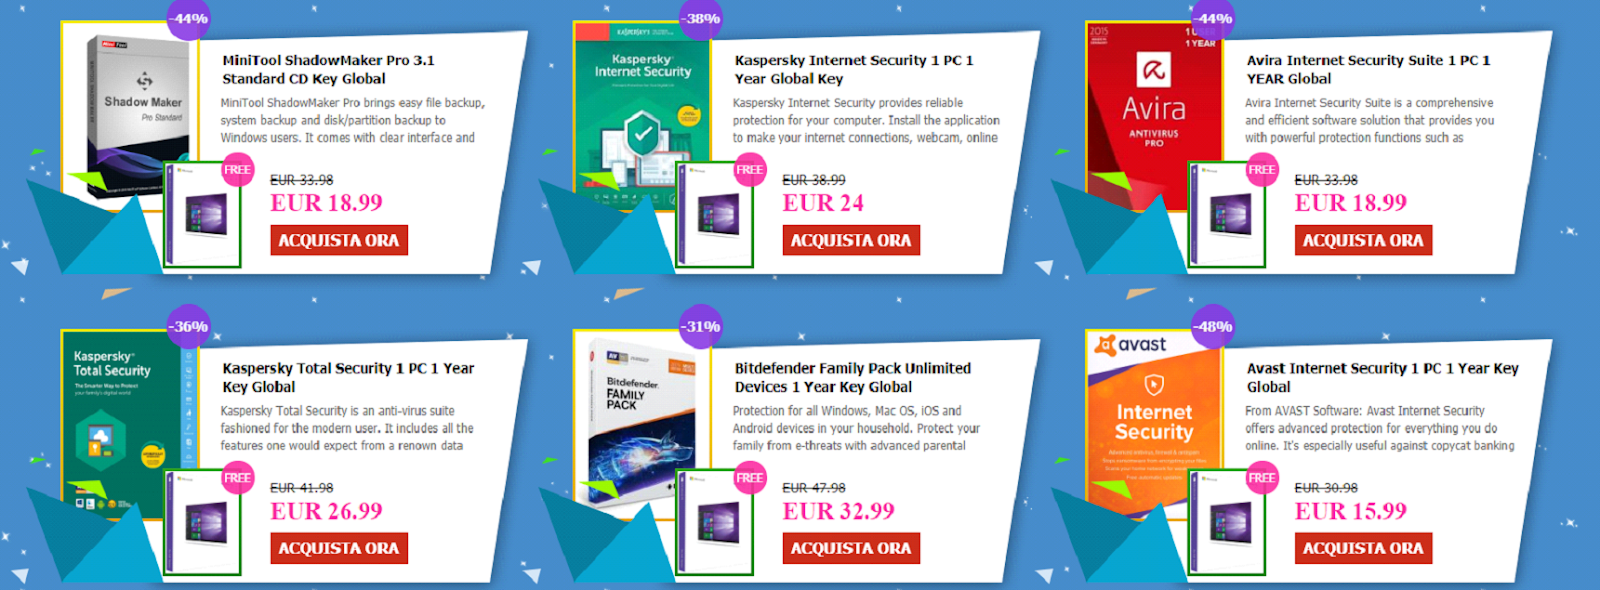 Acquista software Antivirus per 15 € e ricevi Windows 10 Pro gratis!